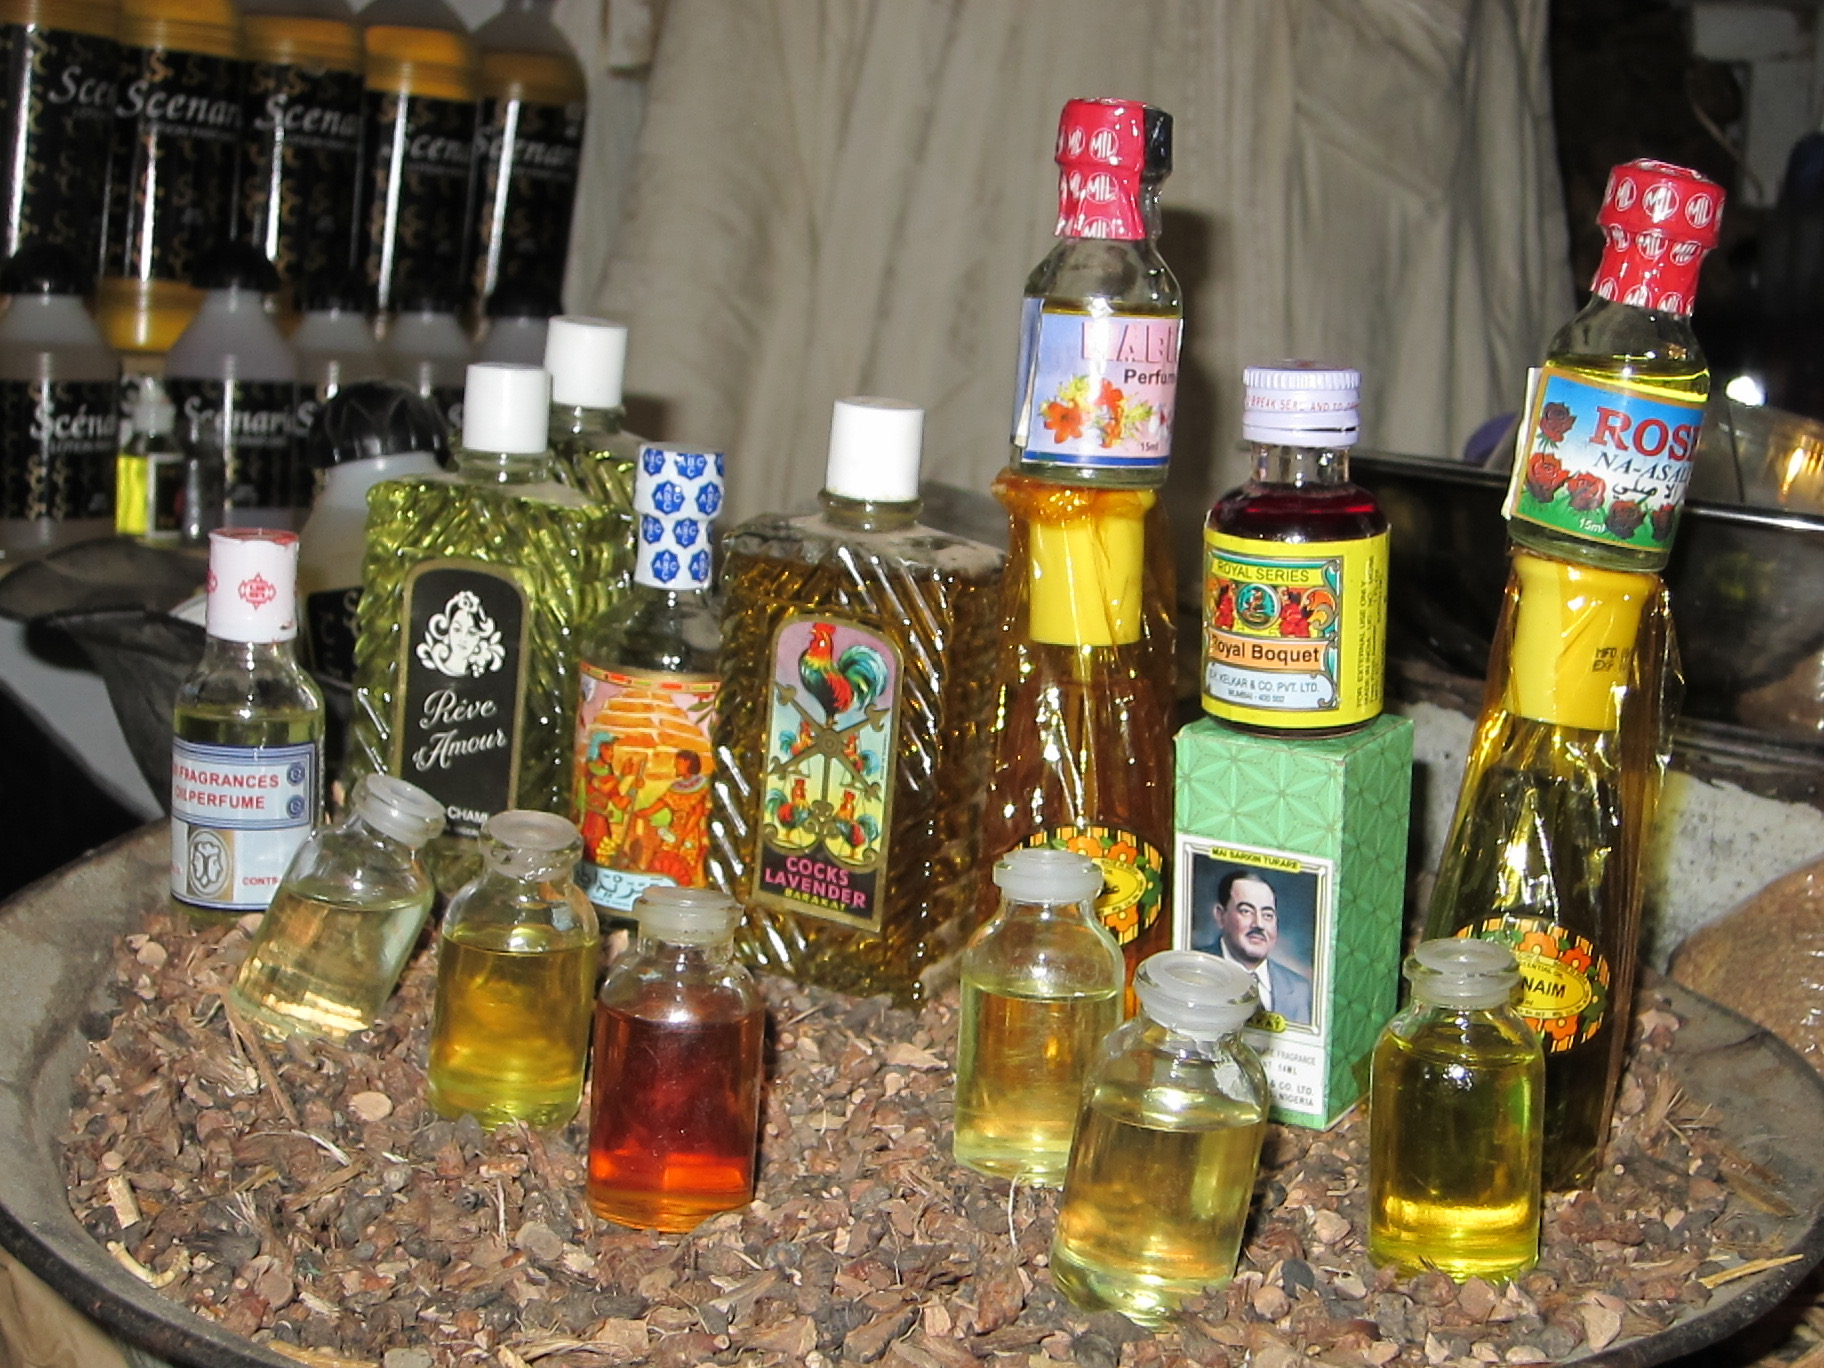 Perfume oils from around the world. Maiduguri, Nigeria (Photo taken by Katie Rhine)